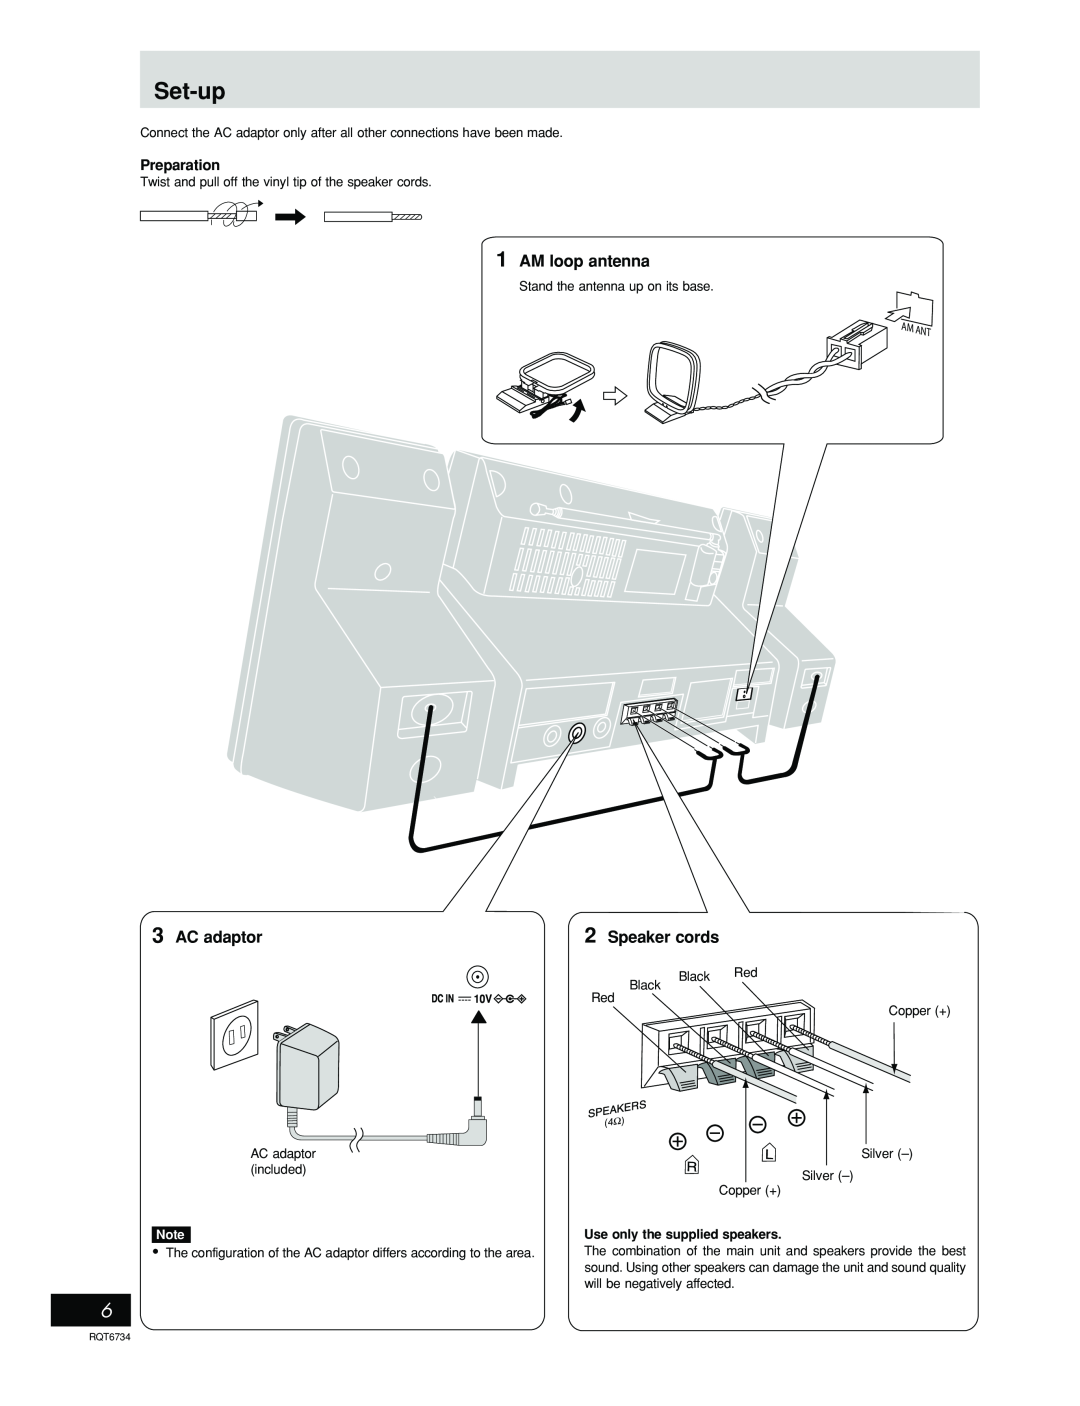 Panasonic SC-EN53 manual Set-up, 1AM loop antenna, AC adaptor, Speaker cords 